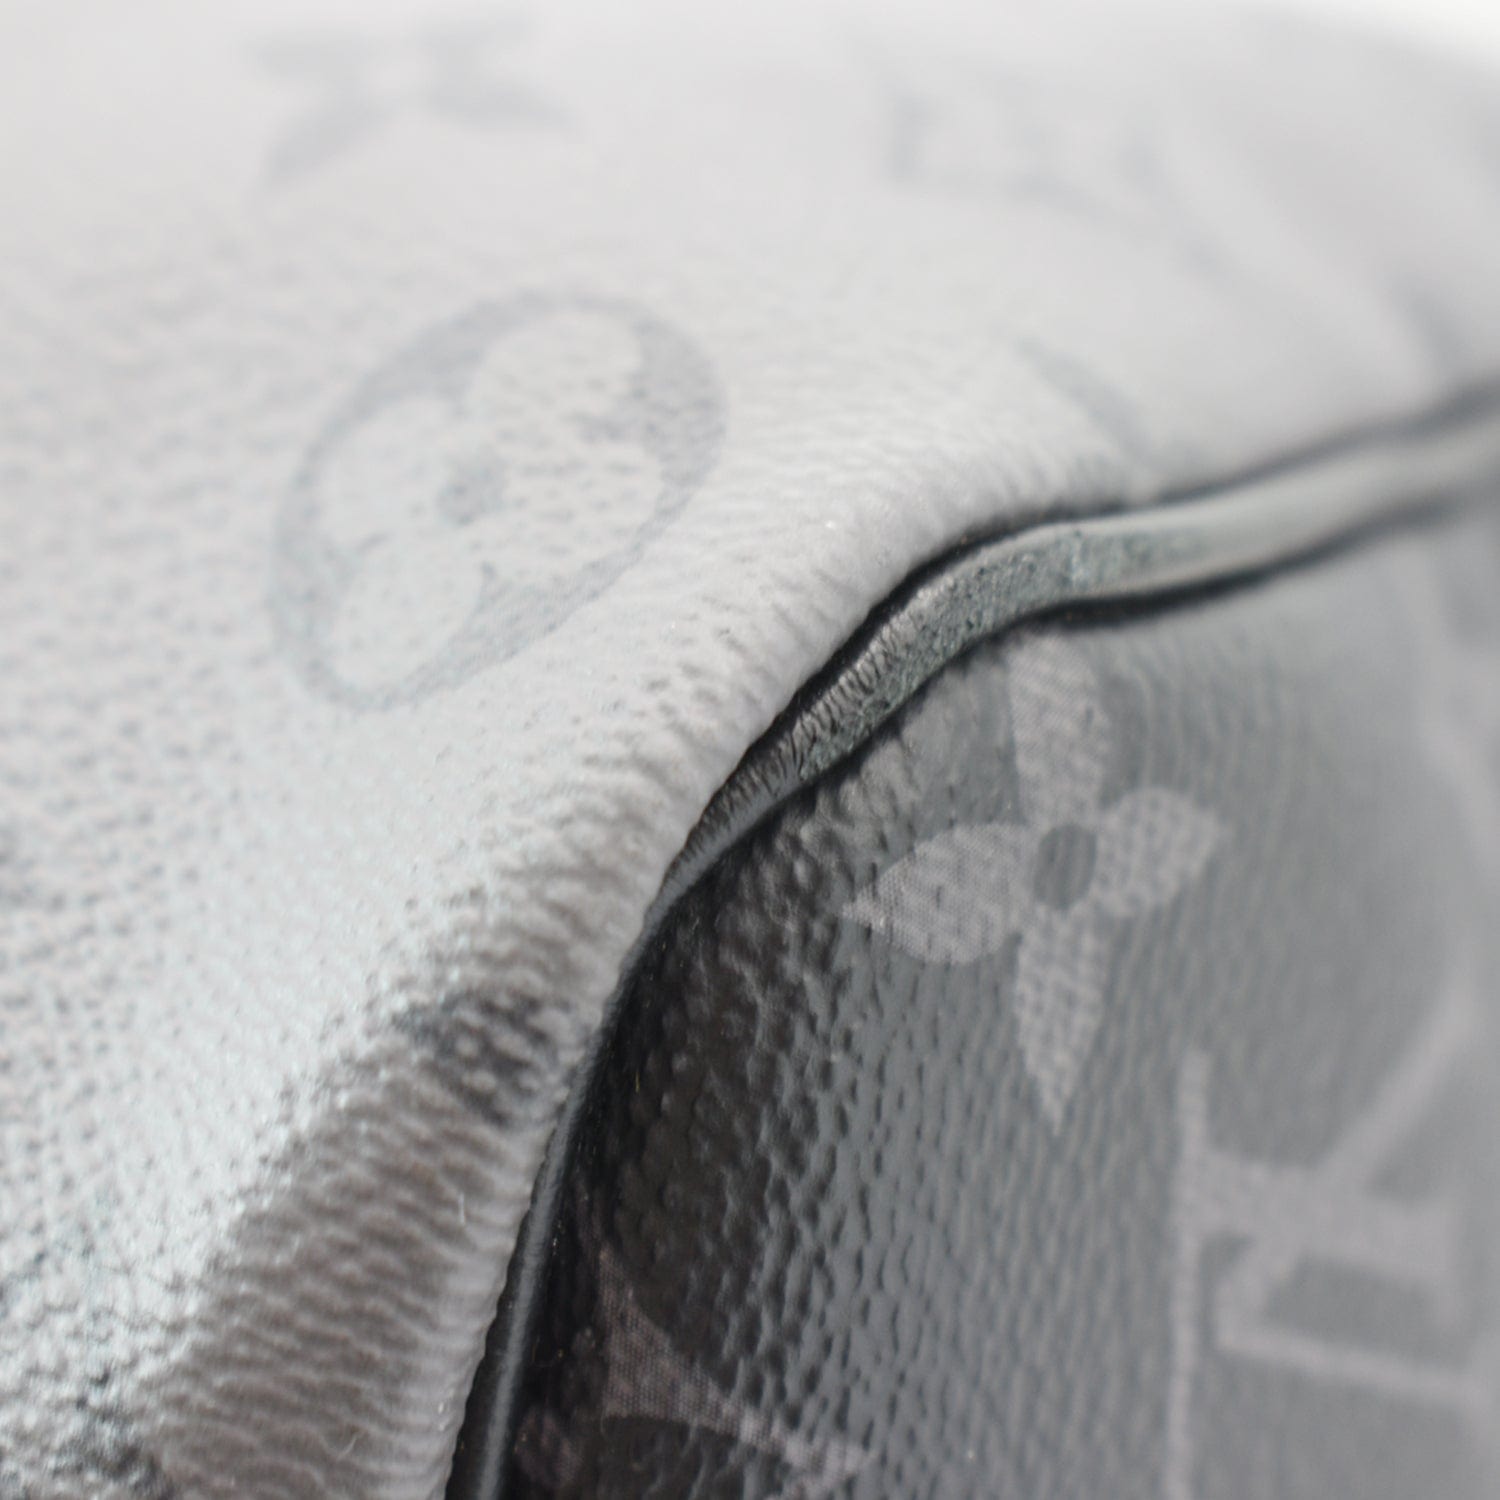 Louis Vuitton Monogram Keepall 50 – Sacdelux